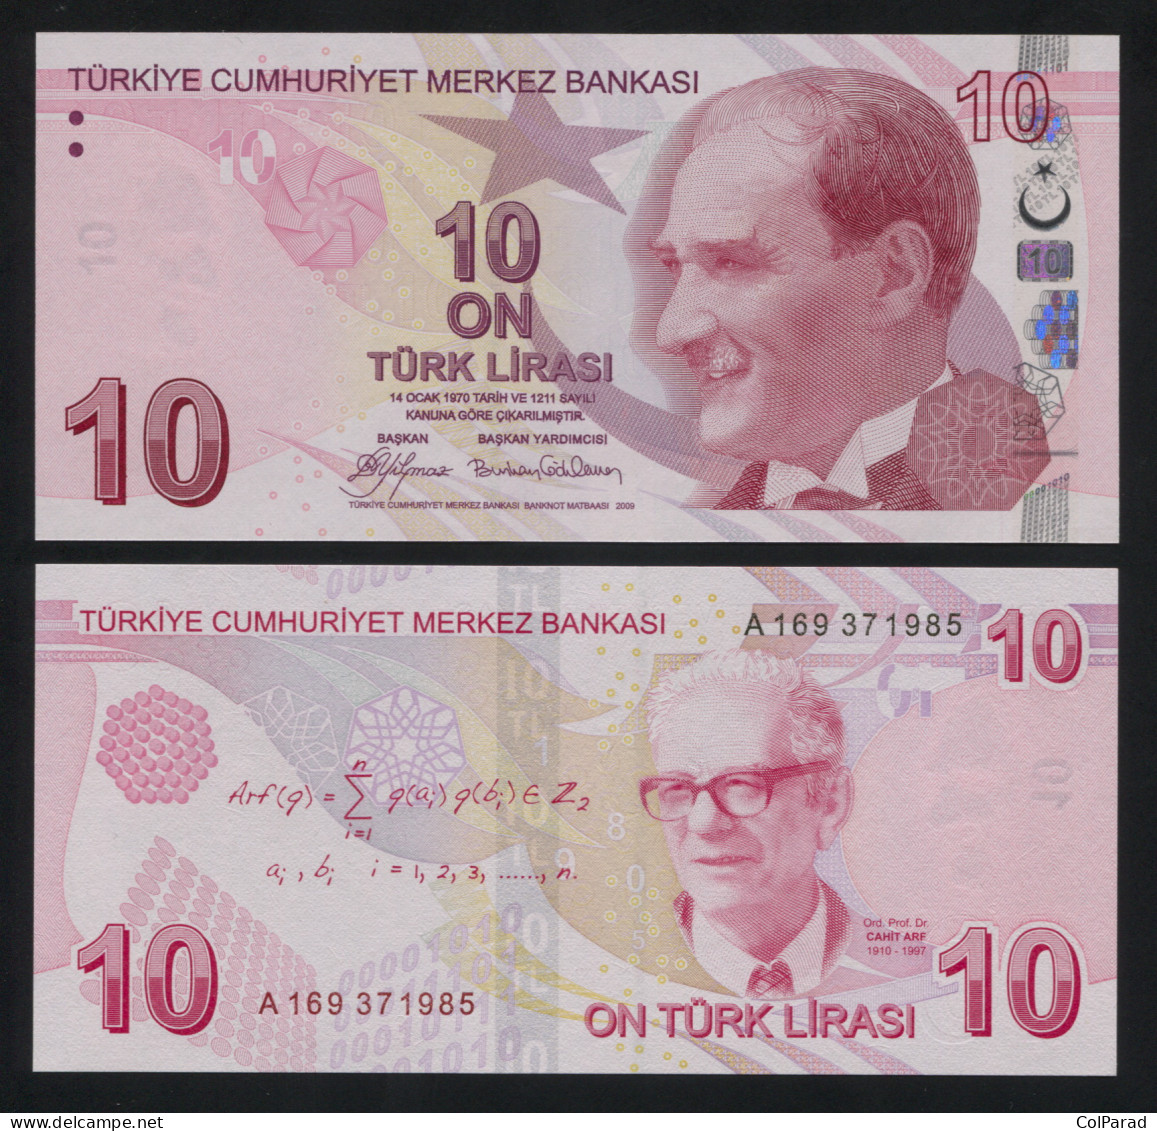 TURKEY 10 TÜRK LIRASI - 2009 - Paper Unc - P.223a Banknote - Turchia